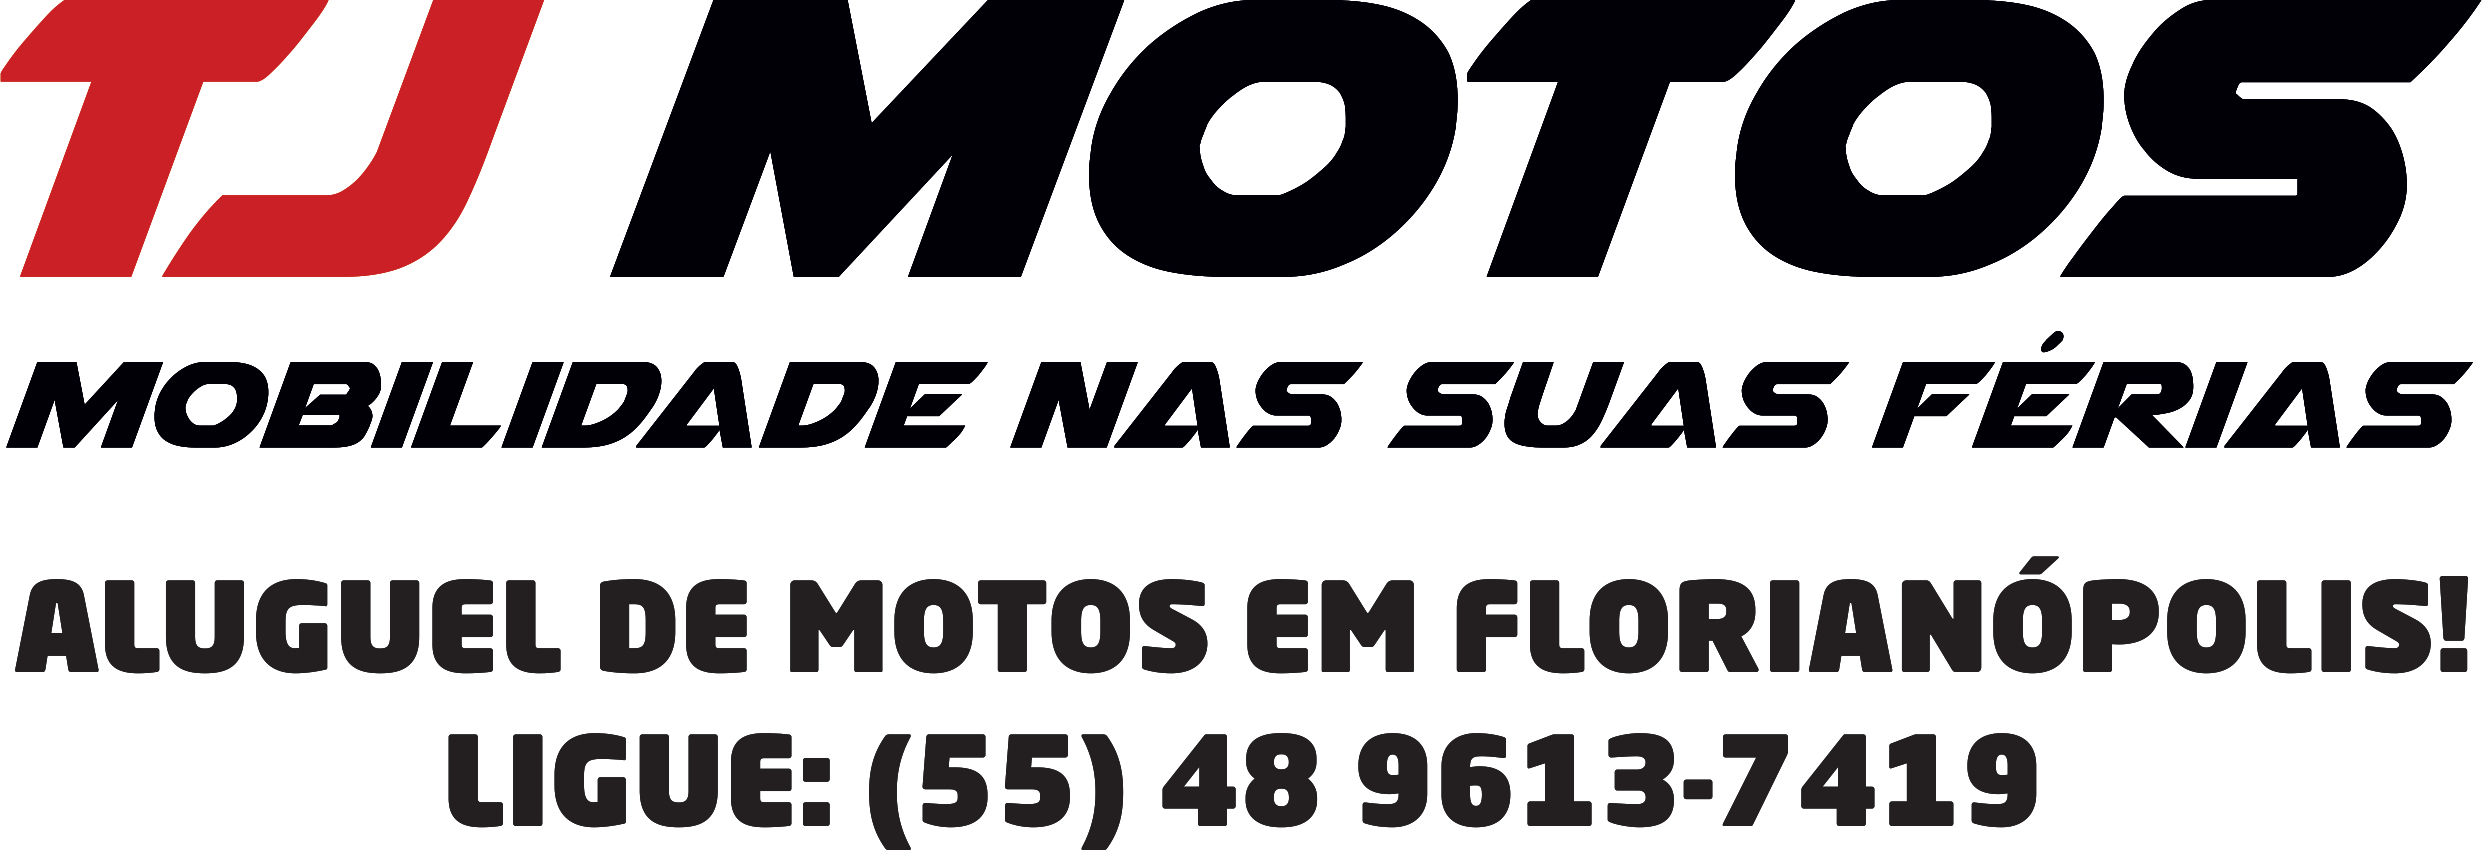 TJ Motos